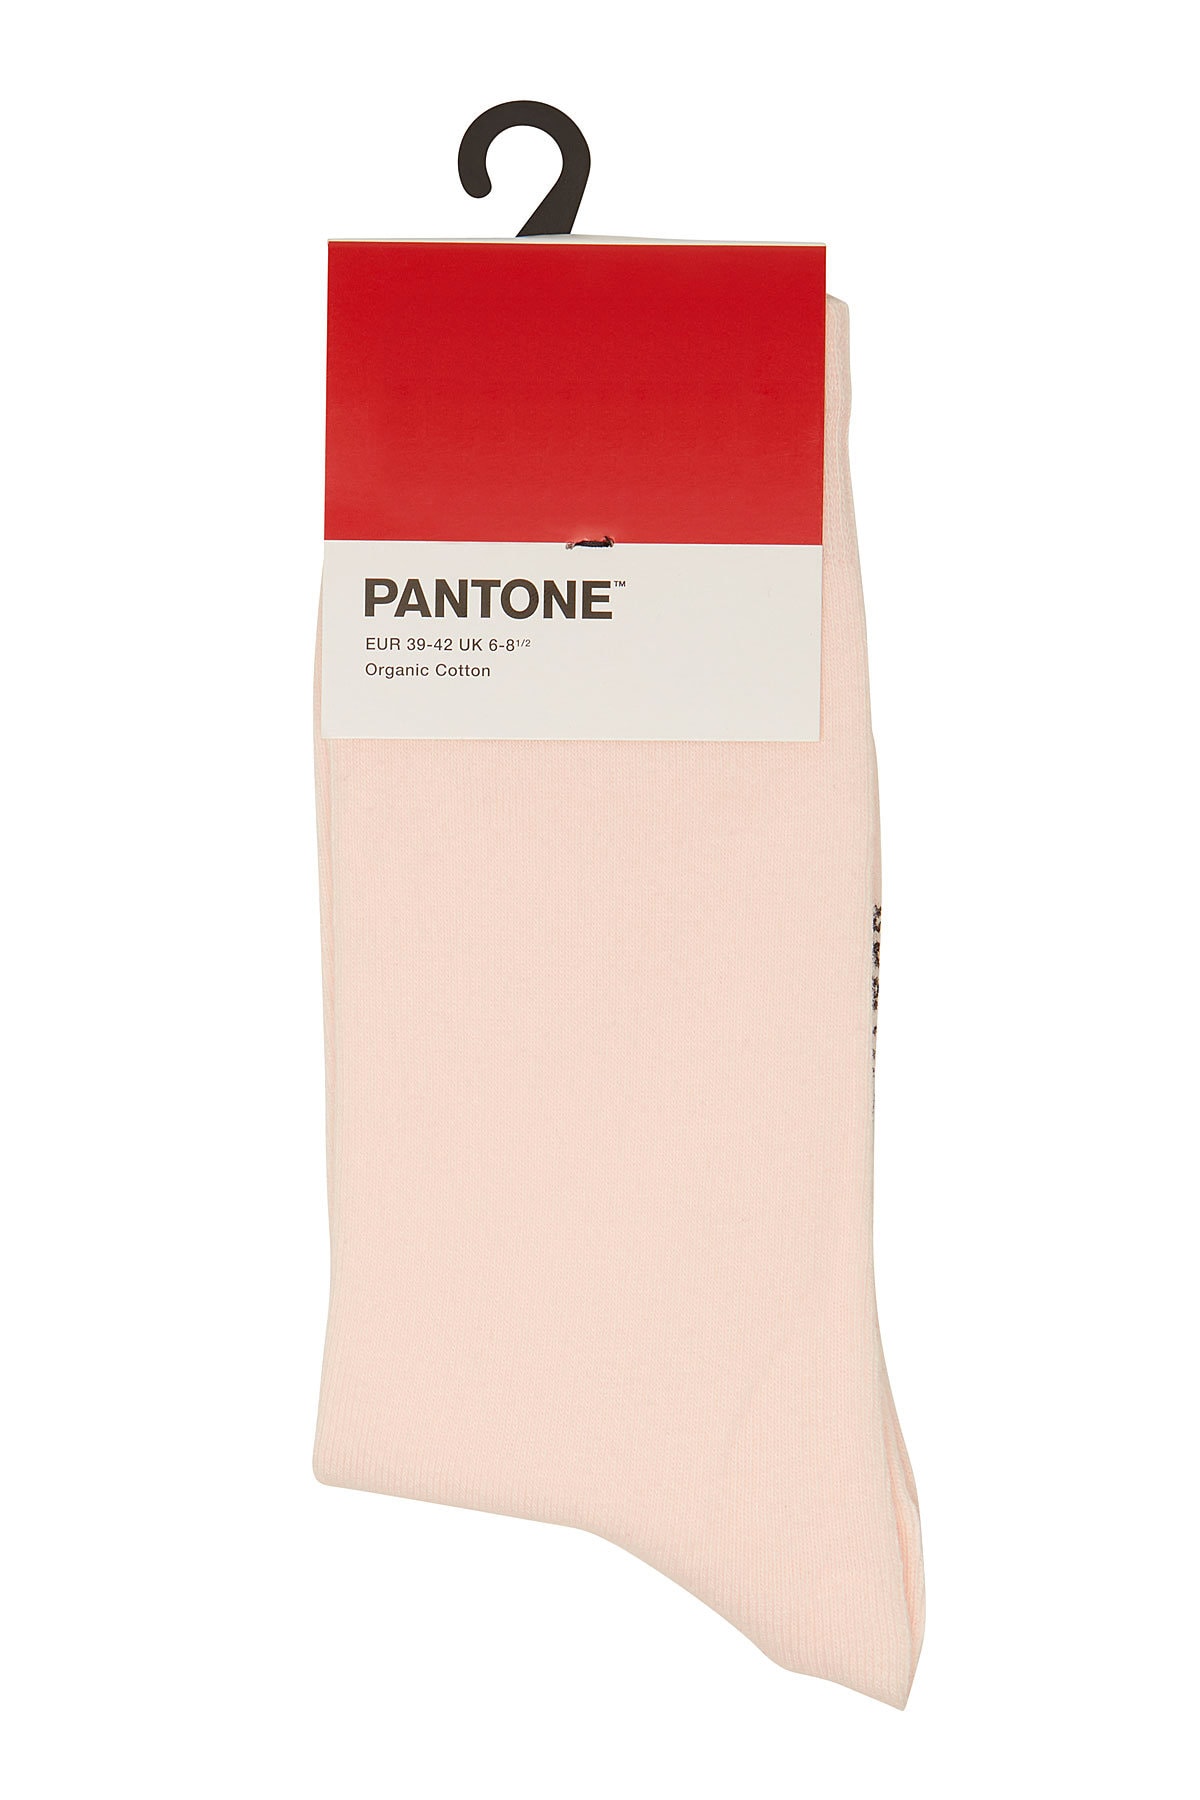 pantone socks stylebop mint pink pastel ultra violet navy red